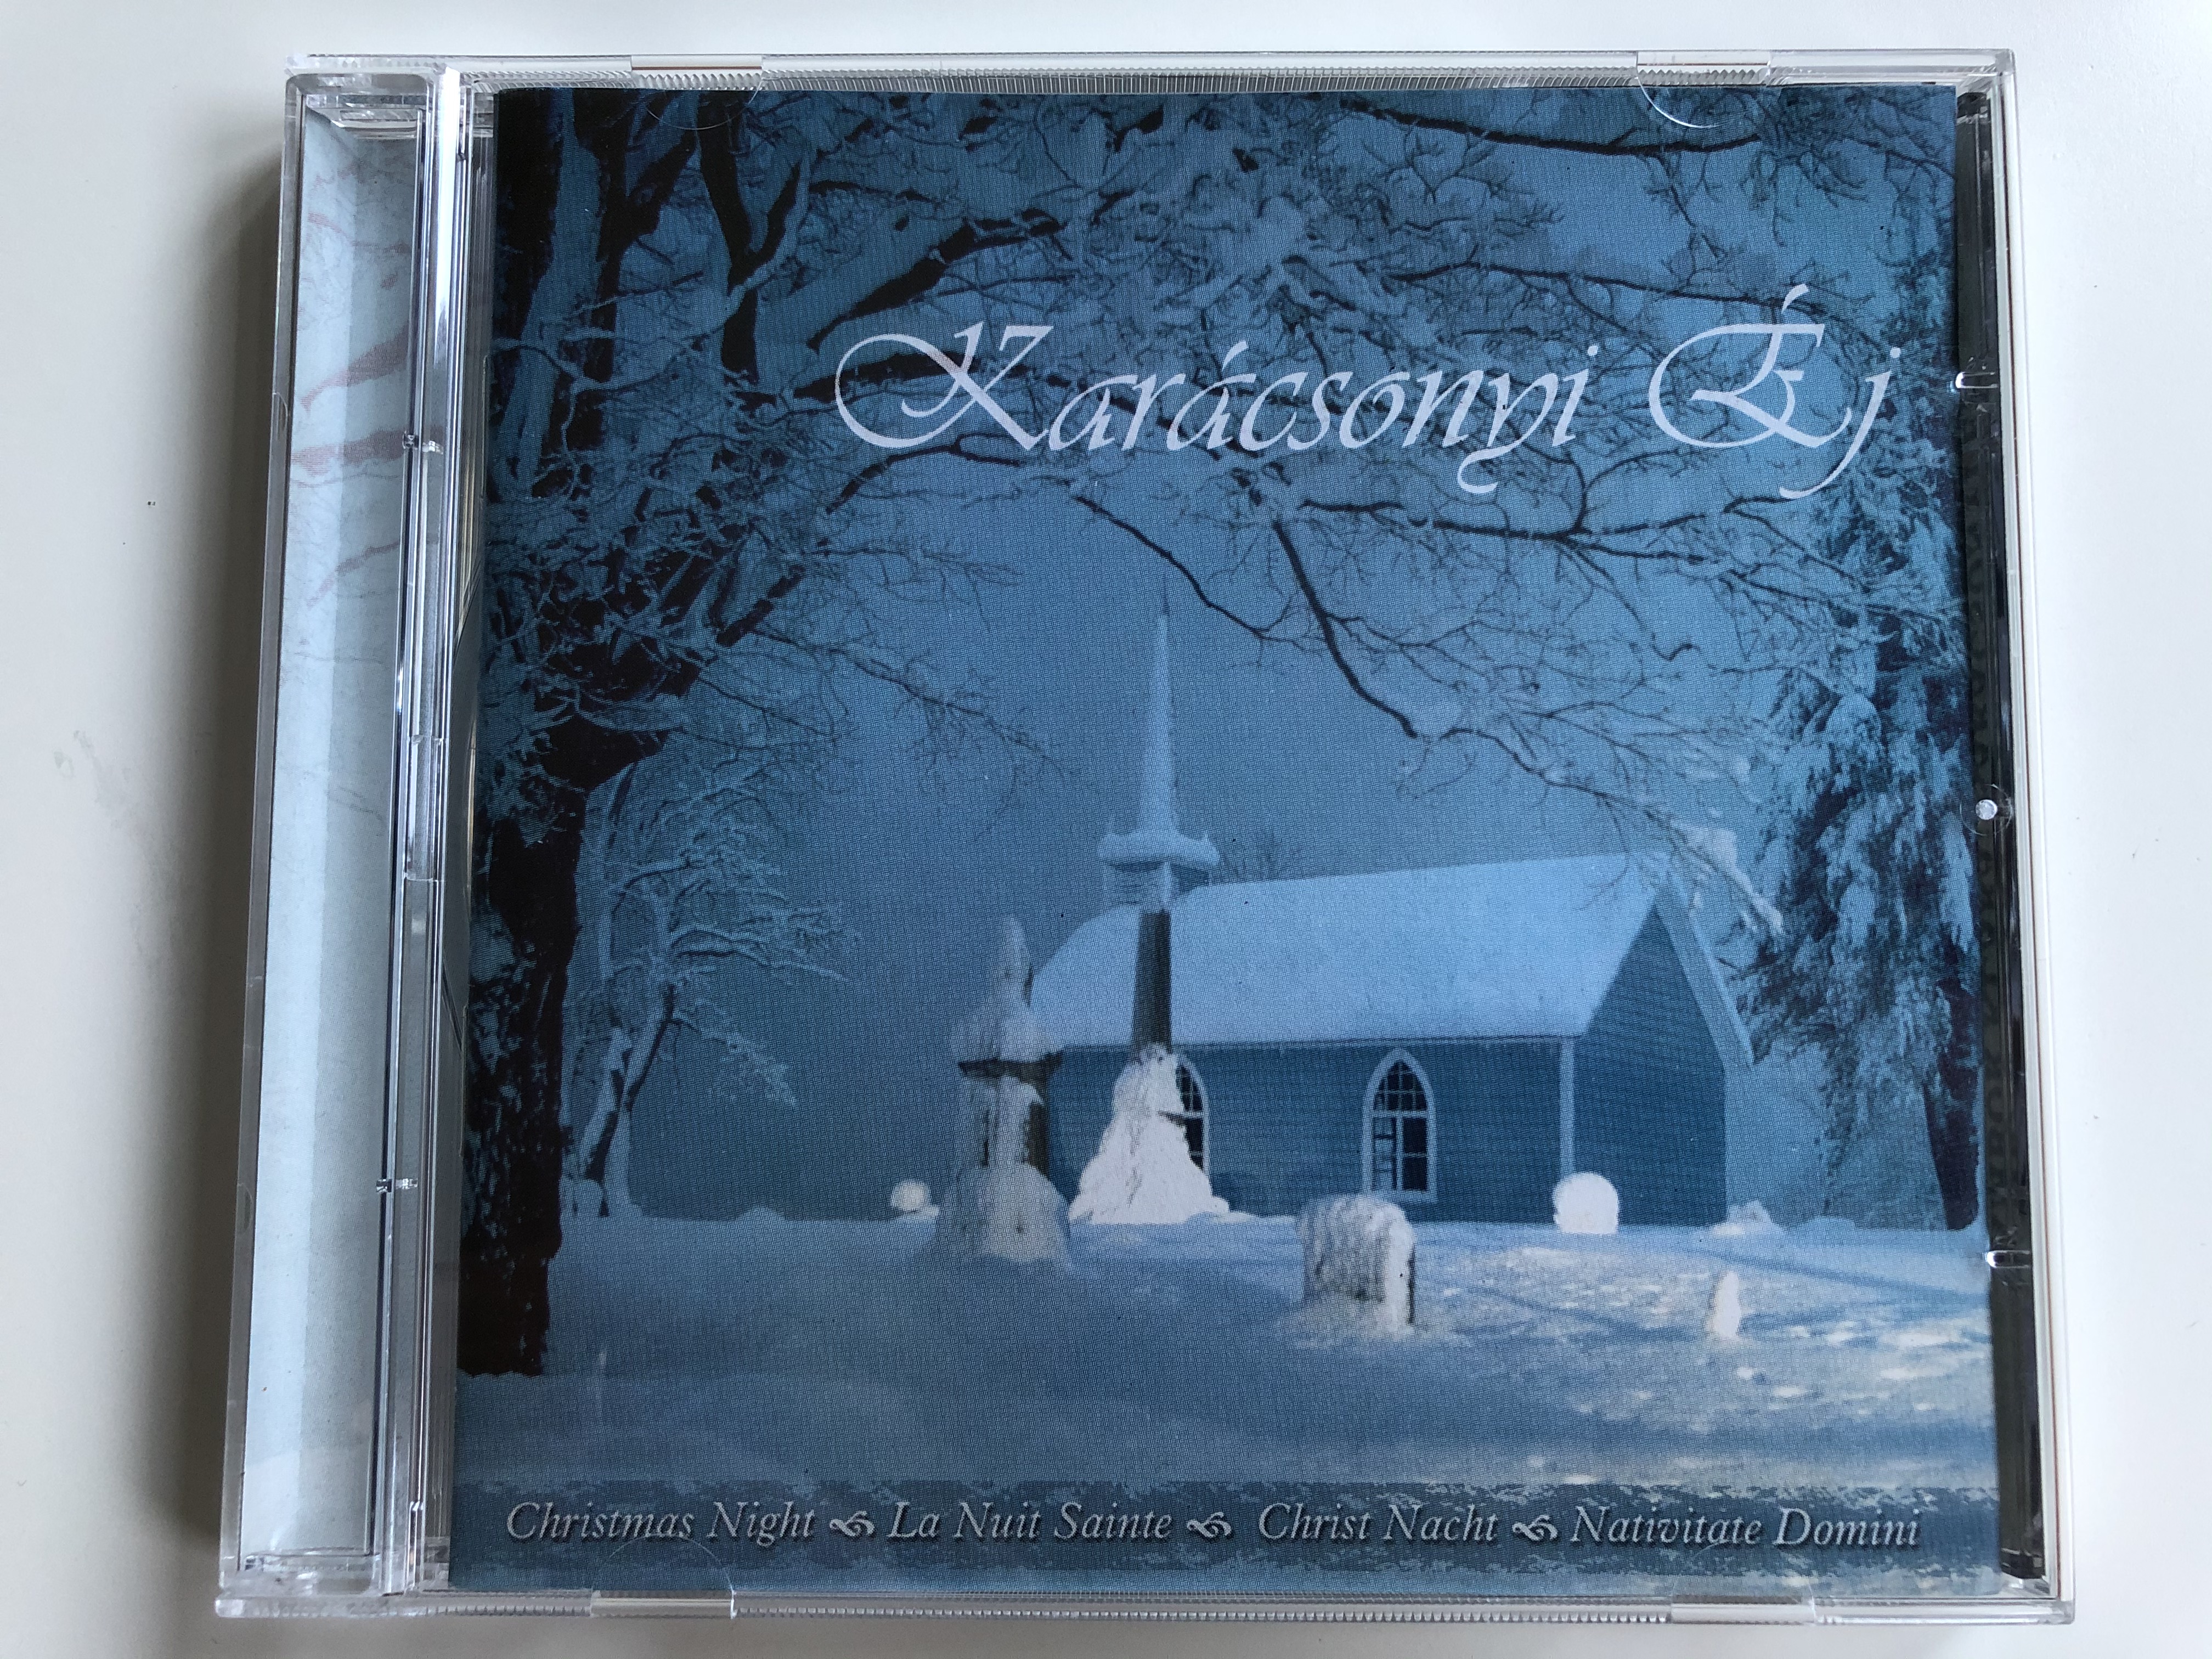 kar-csonyi-j-christmas-night-la-nuit-sainte-christ-nacht-nativitate-domini-audio-cd-2000-jk-002-1-.jpg